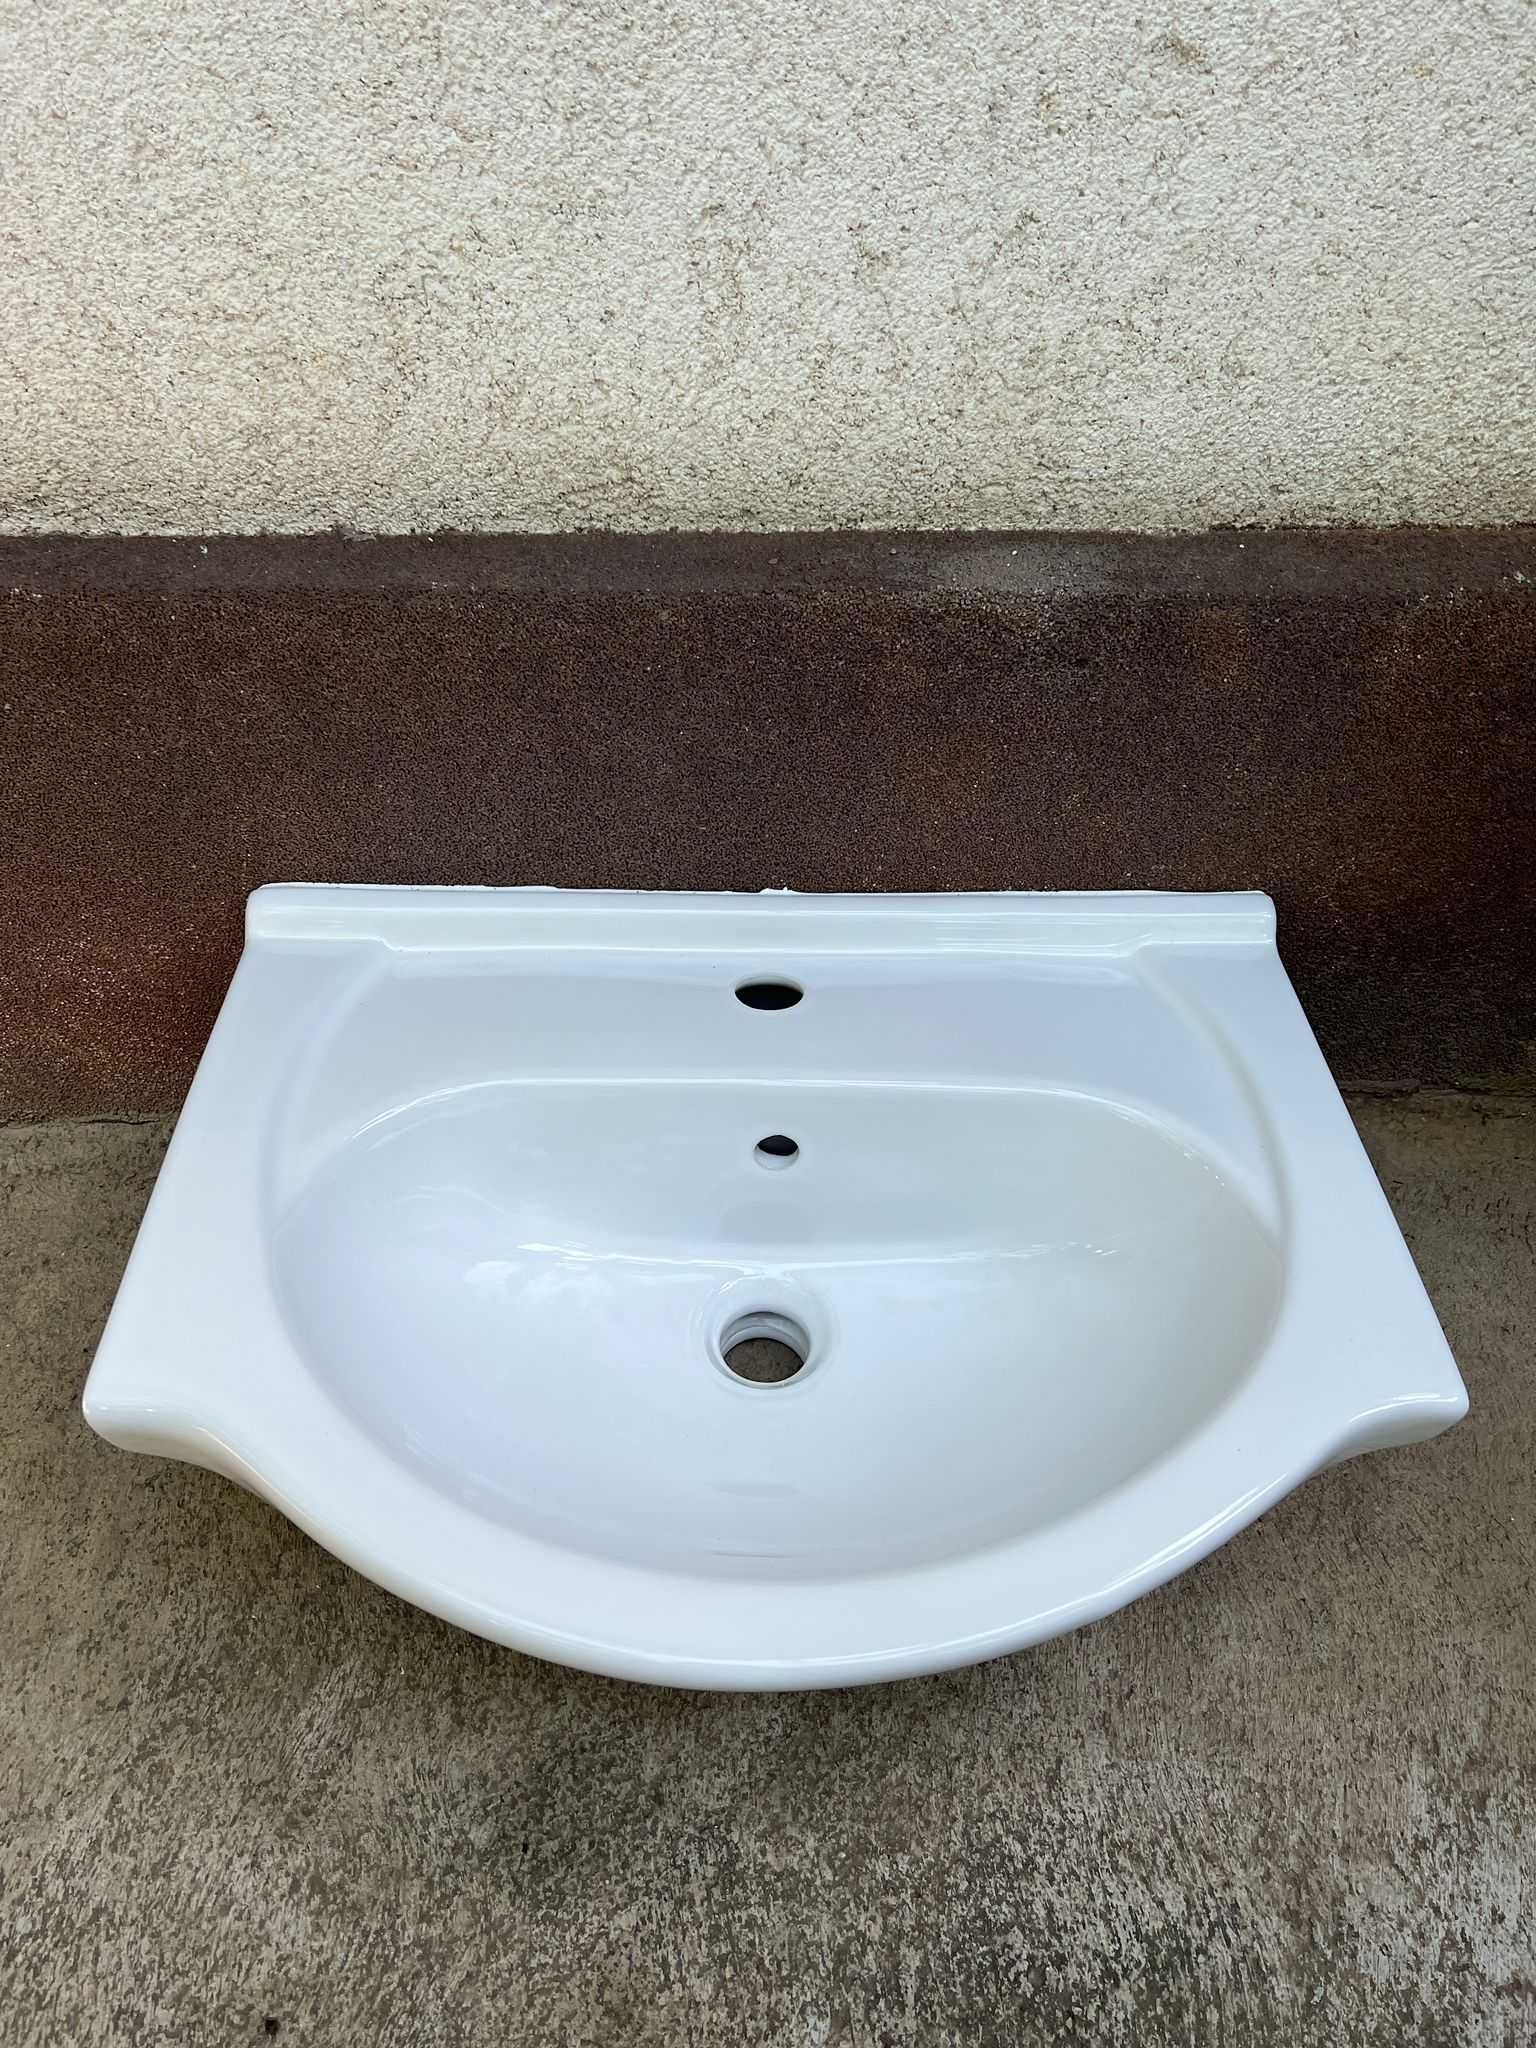 Chiuveta Cersanit 55 cm pentru baie